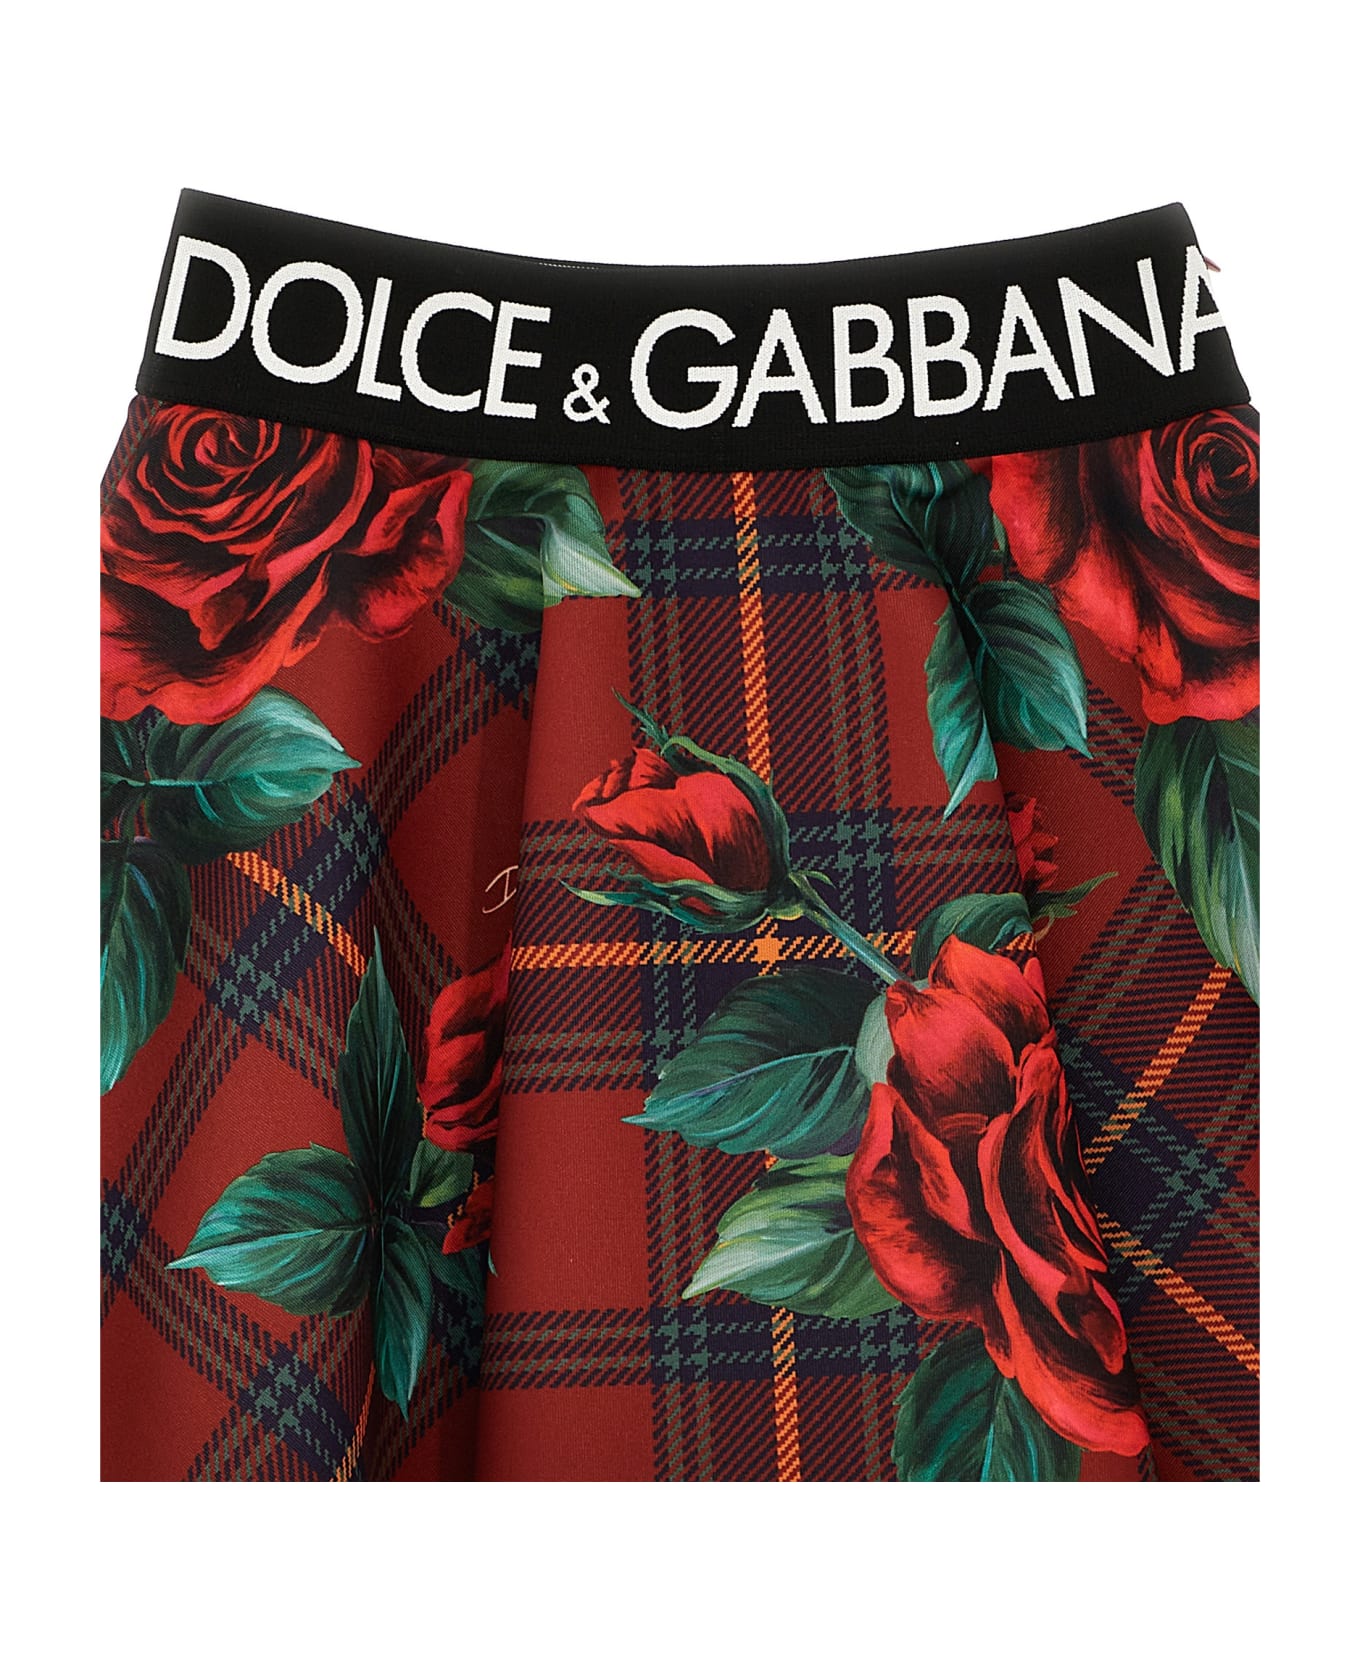 Dolce & Gabbana 'back To School' Skirt - Qe